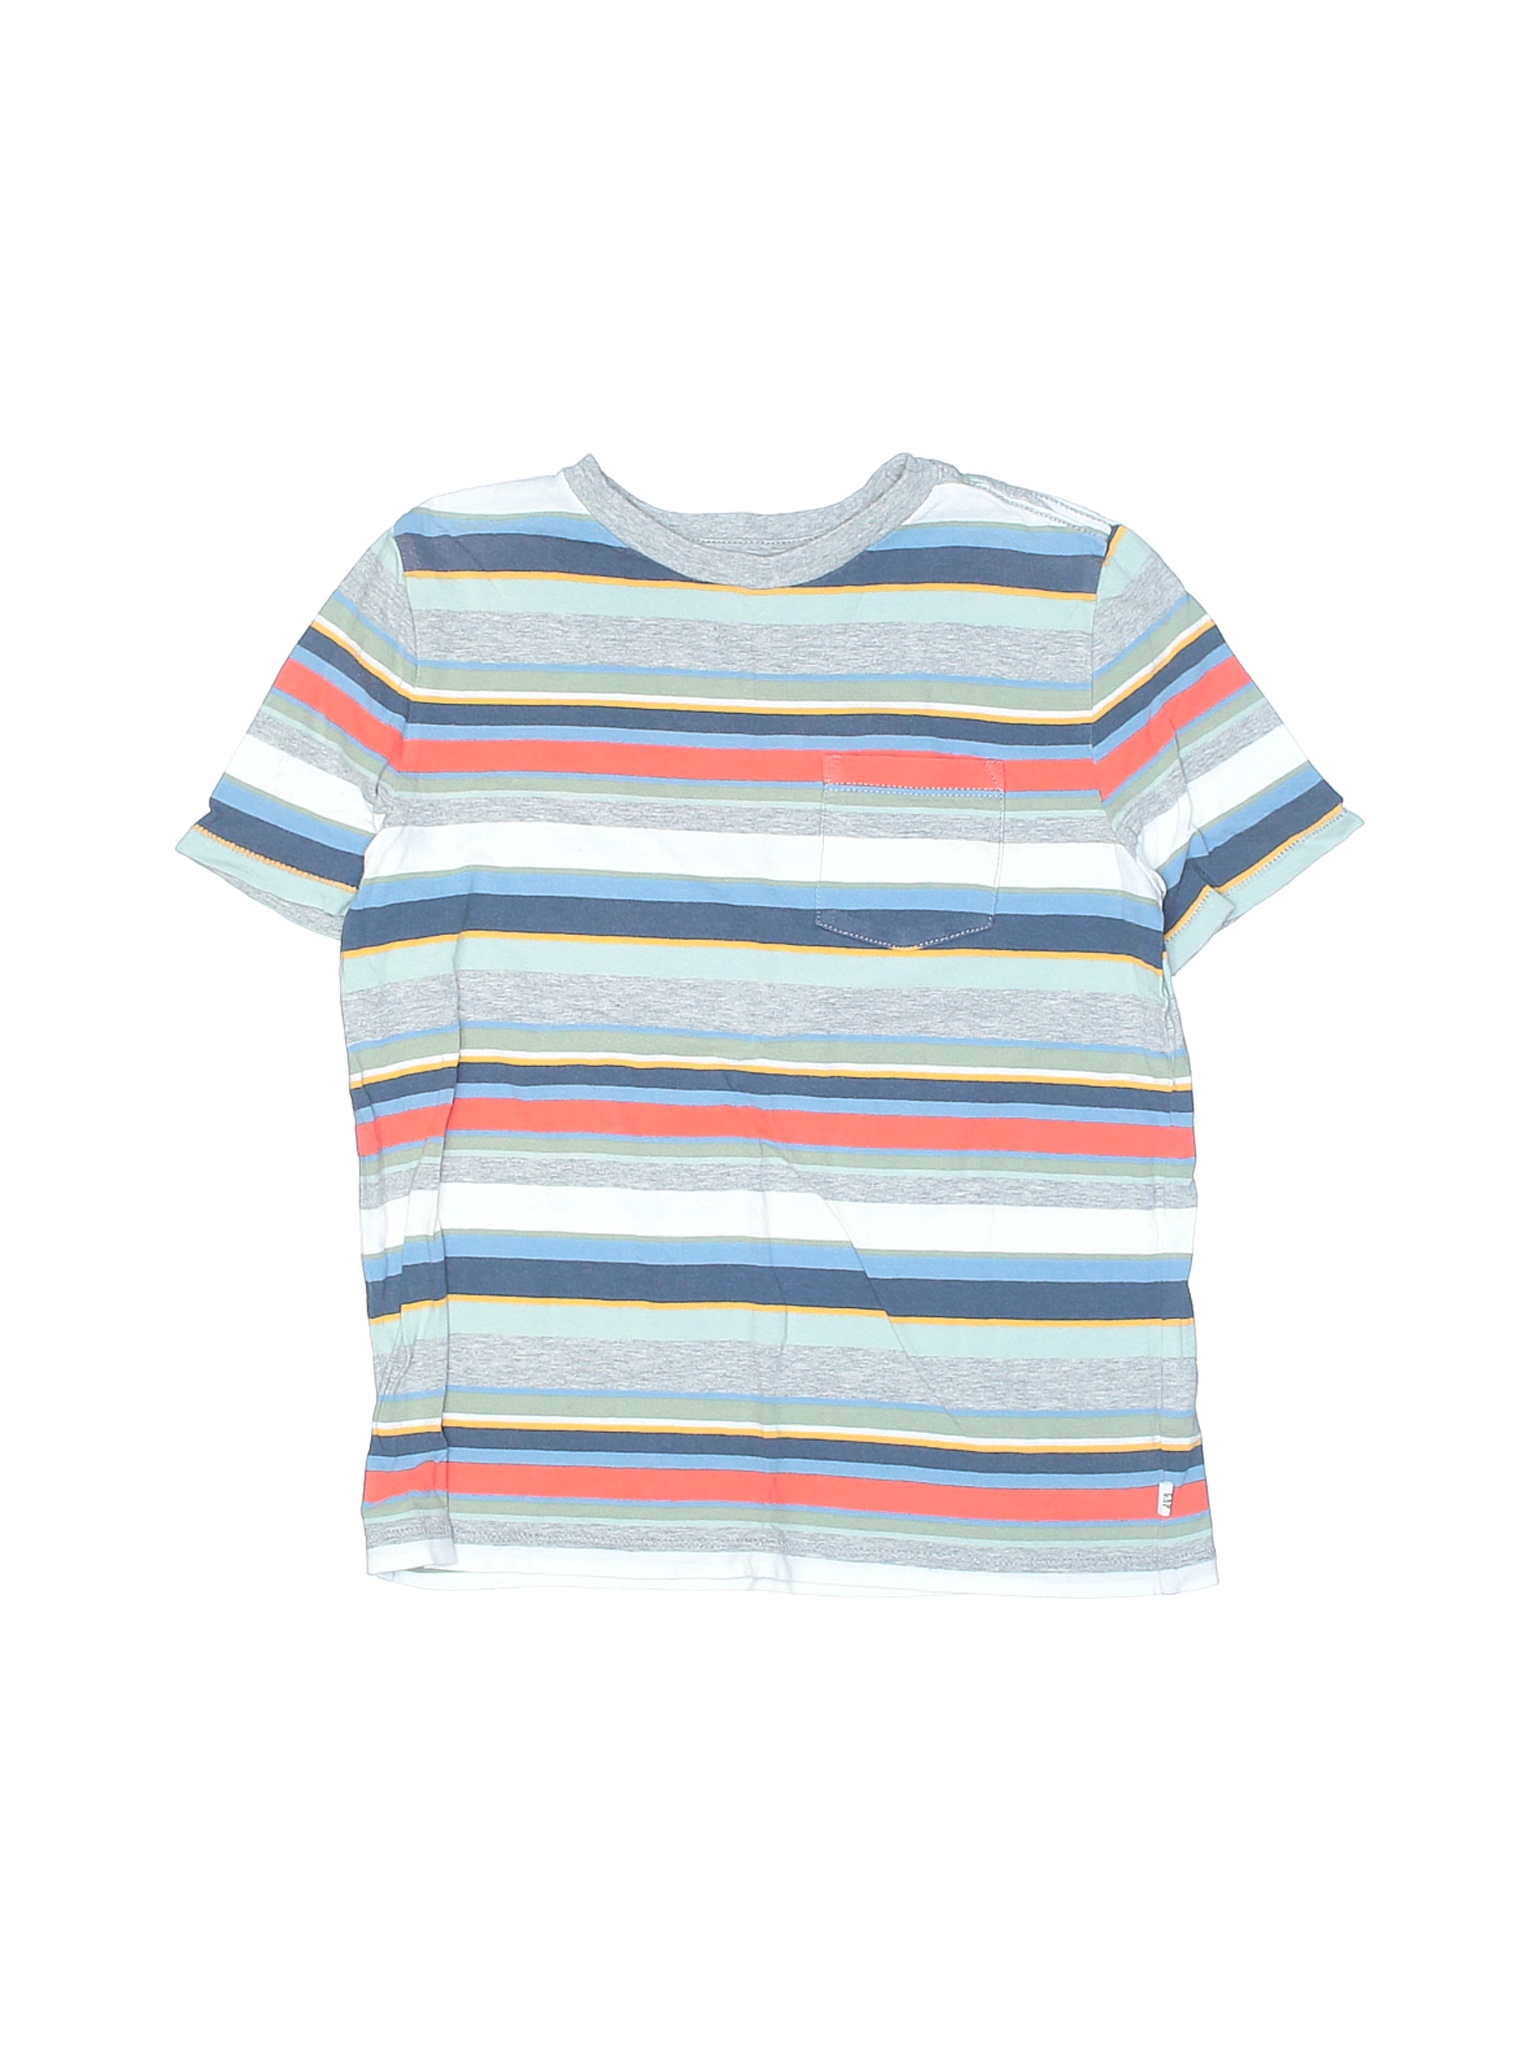 Gap Kids Boys Gray Short Sleeve T-Shirt 8 | eBay